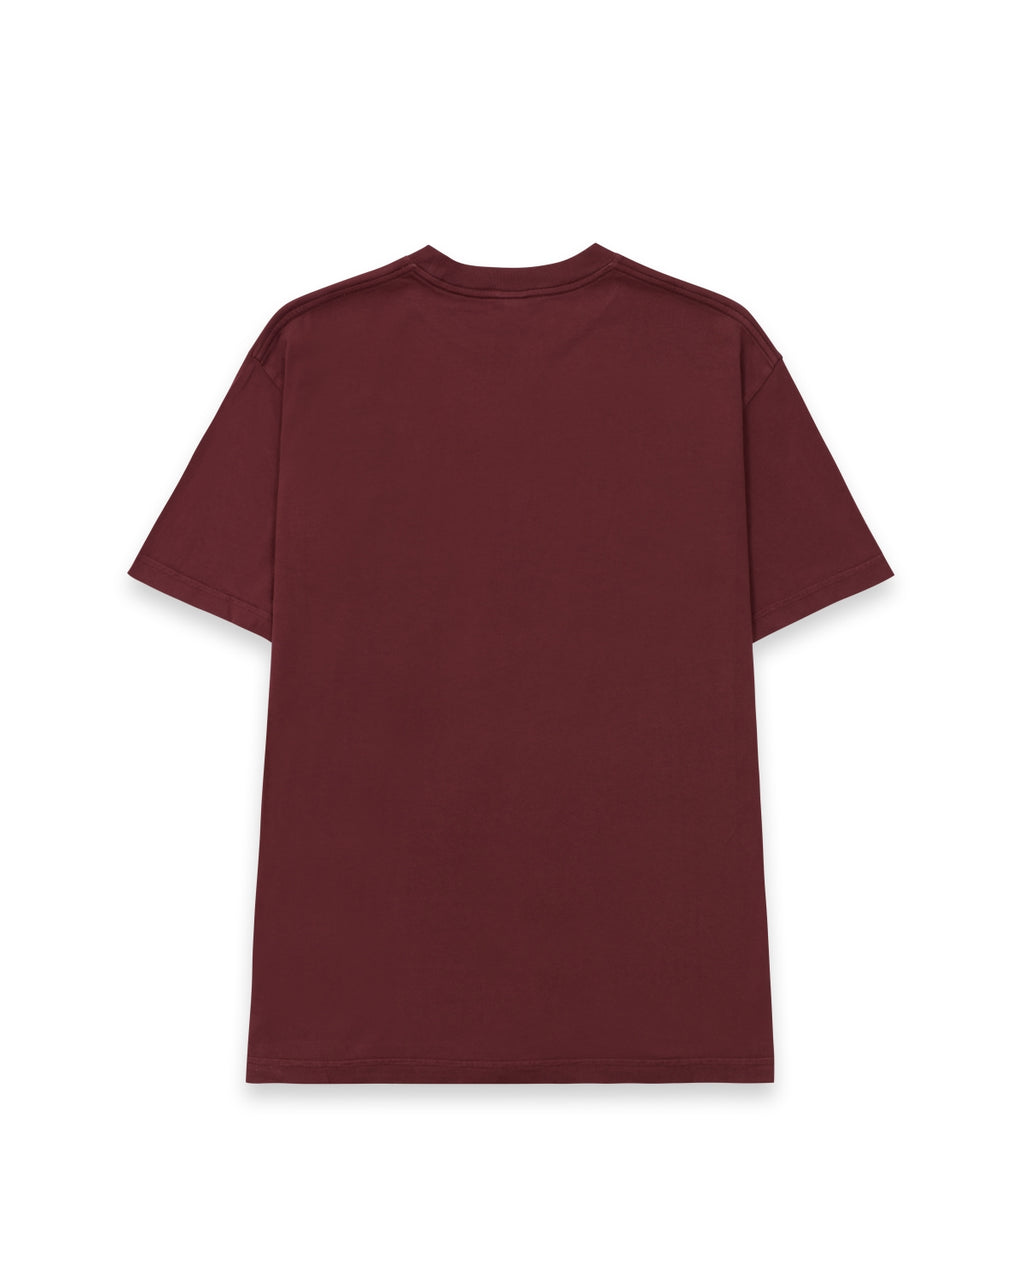 Leomi Sadler Semi T-Shirt - Maroon 2